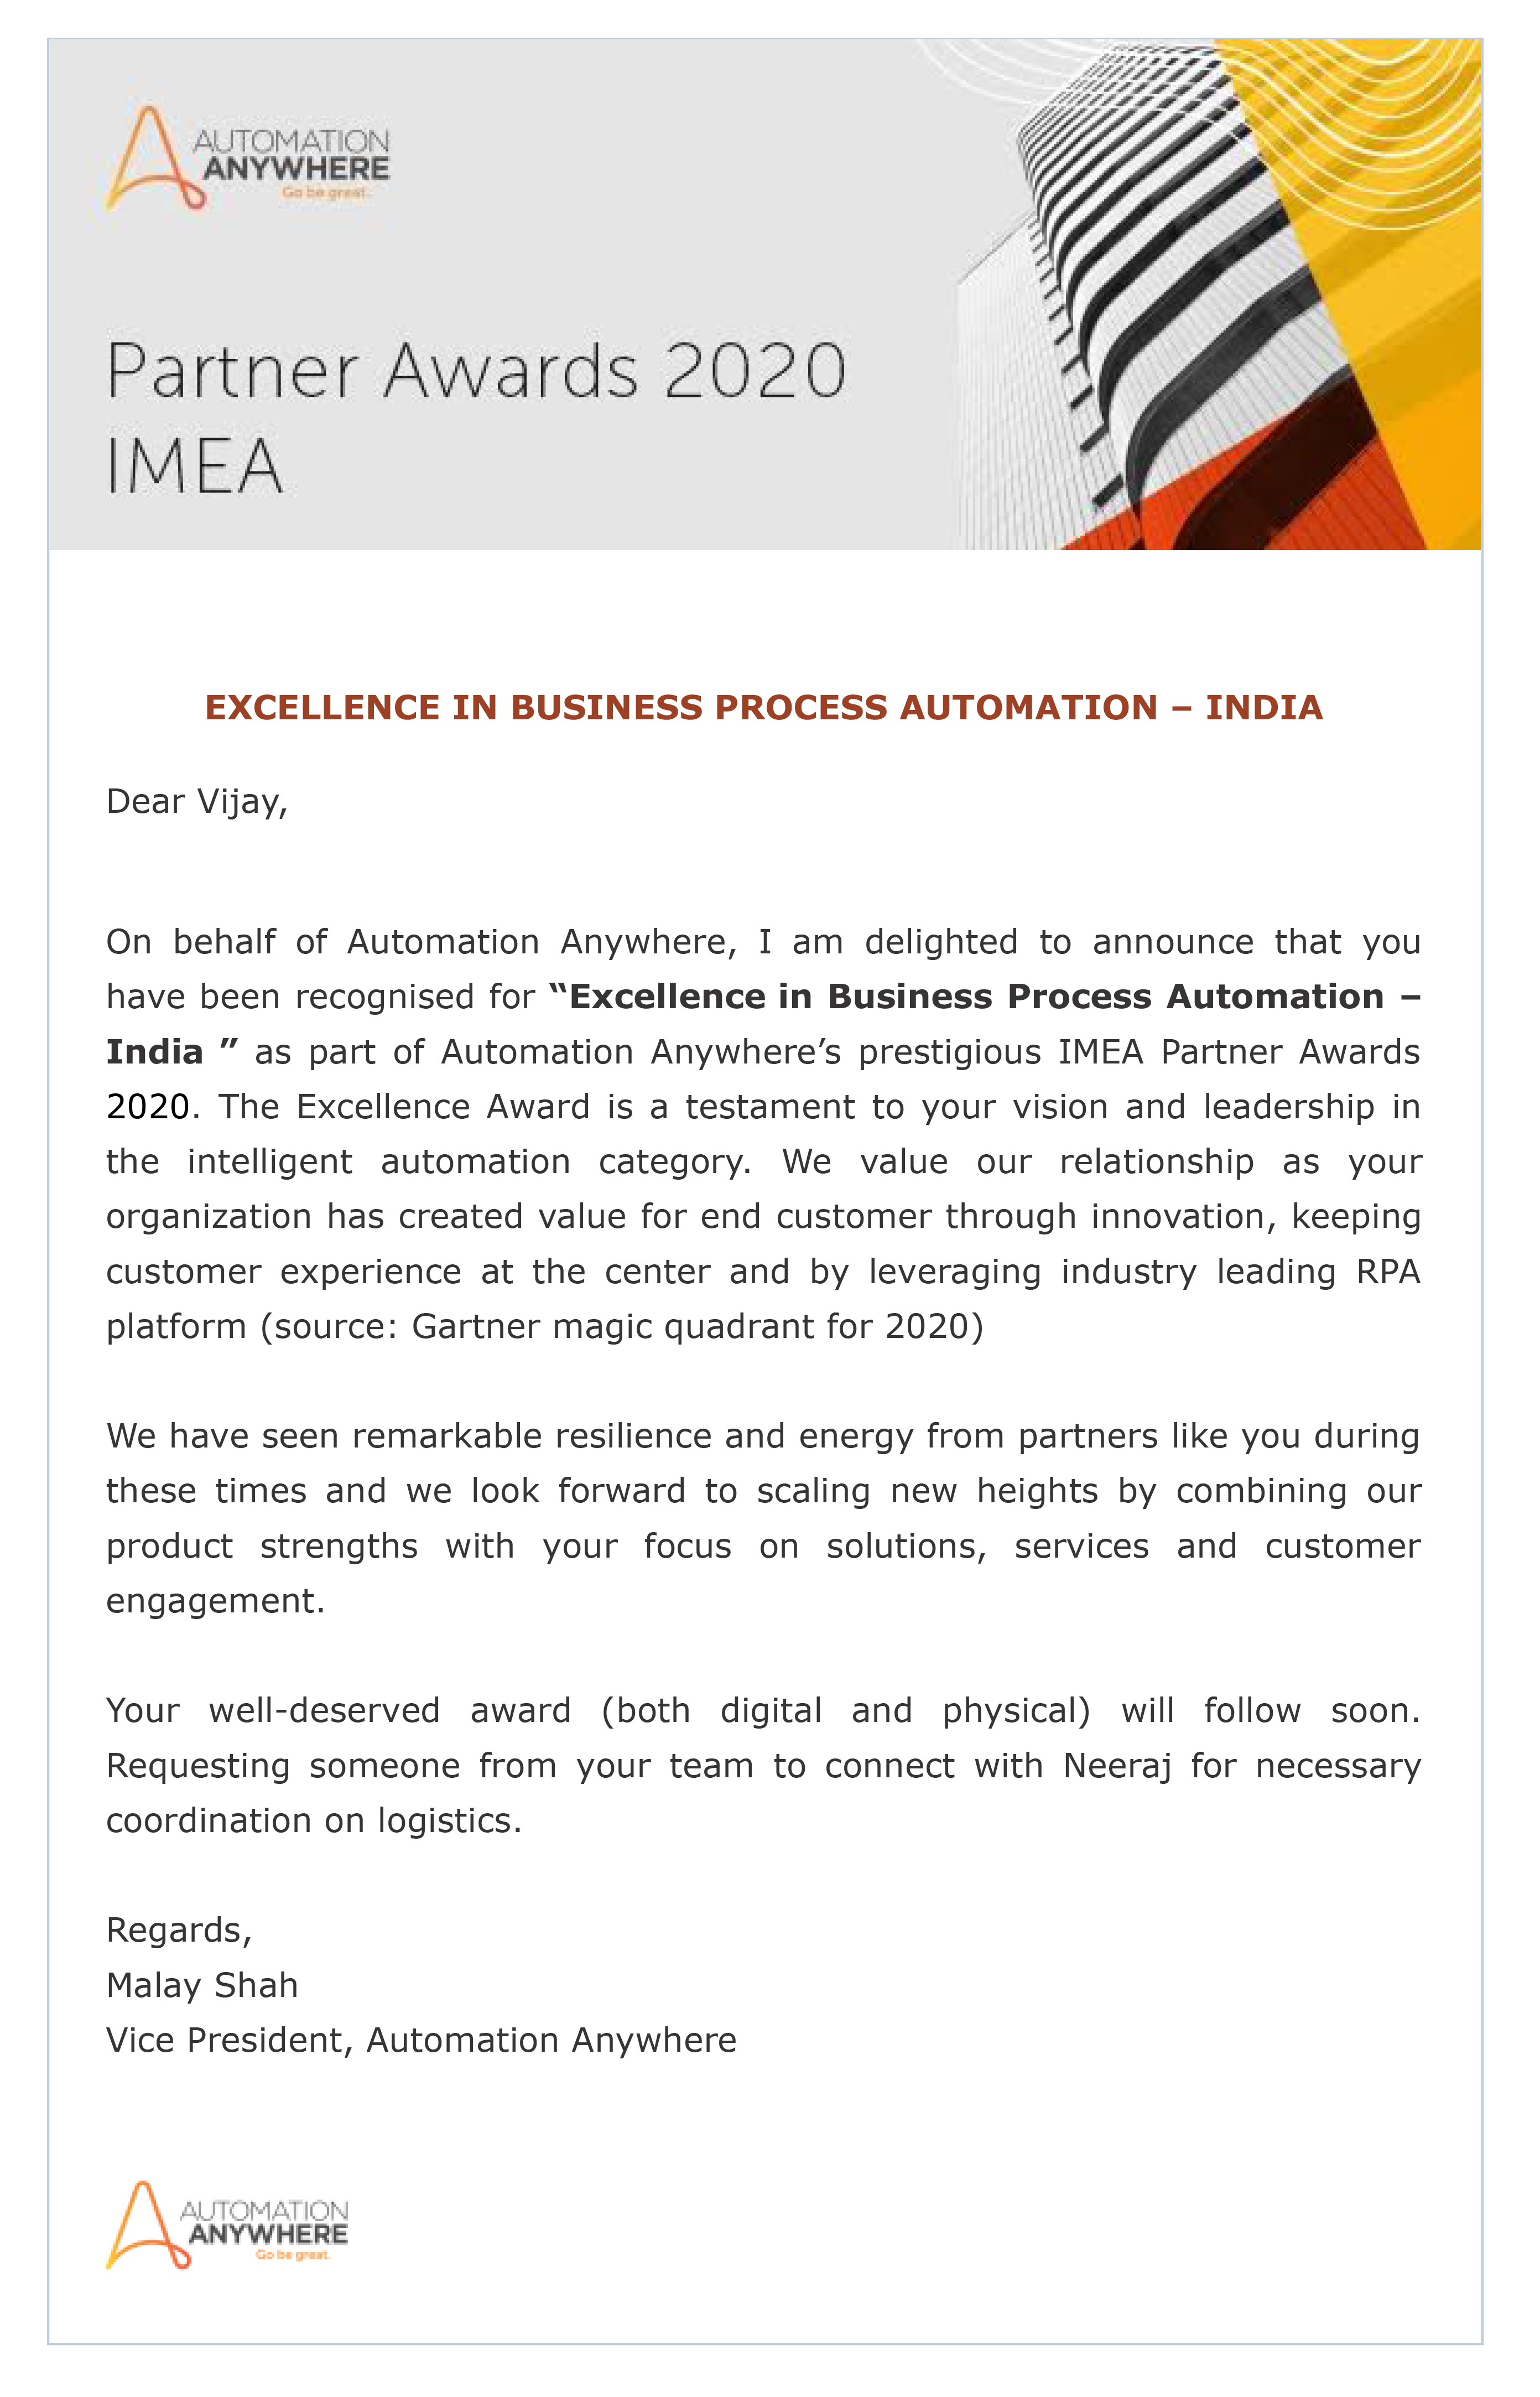 Tangentia | Tangentia receives Automation Anywhere's IMEA Partner Awards 2020